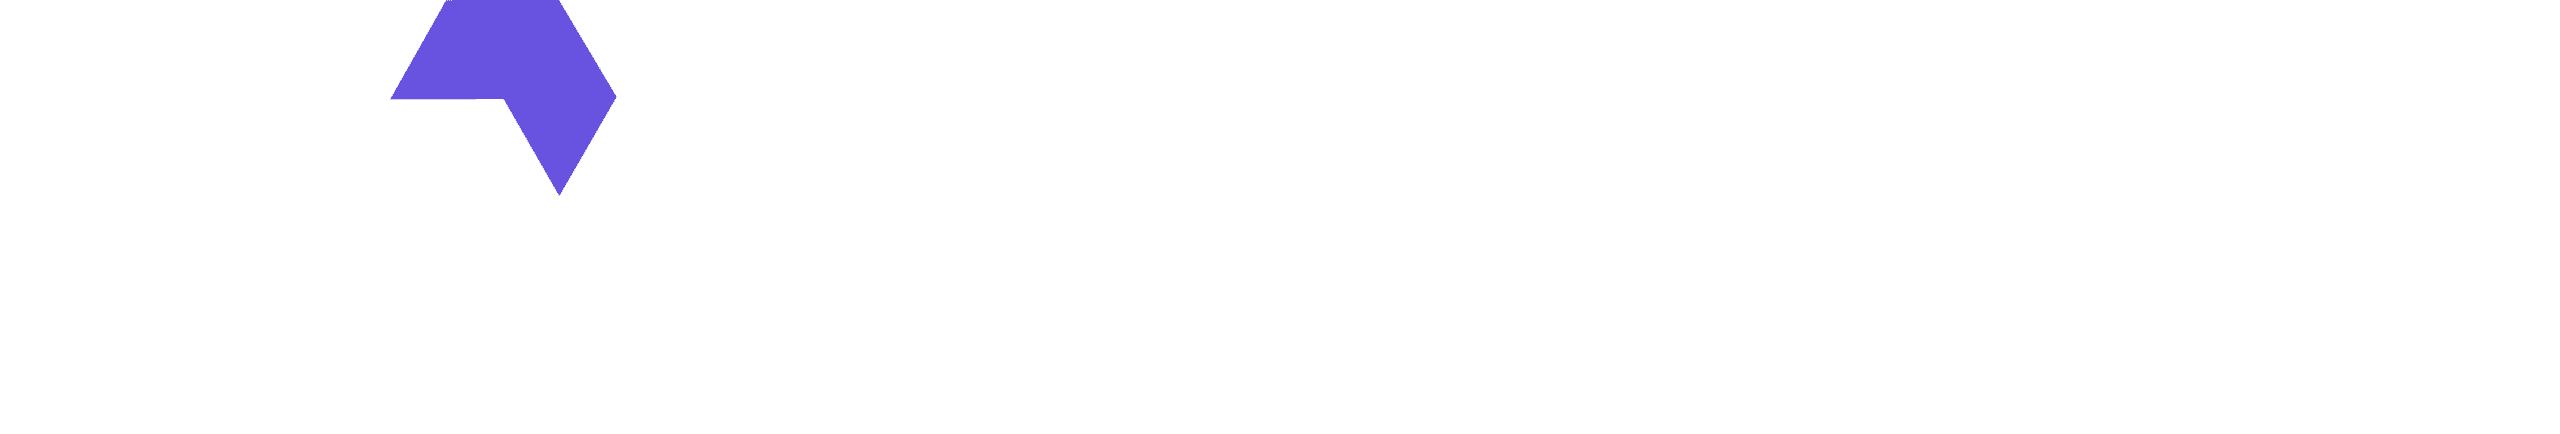 nm digital ltd logo